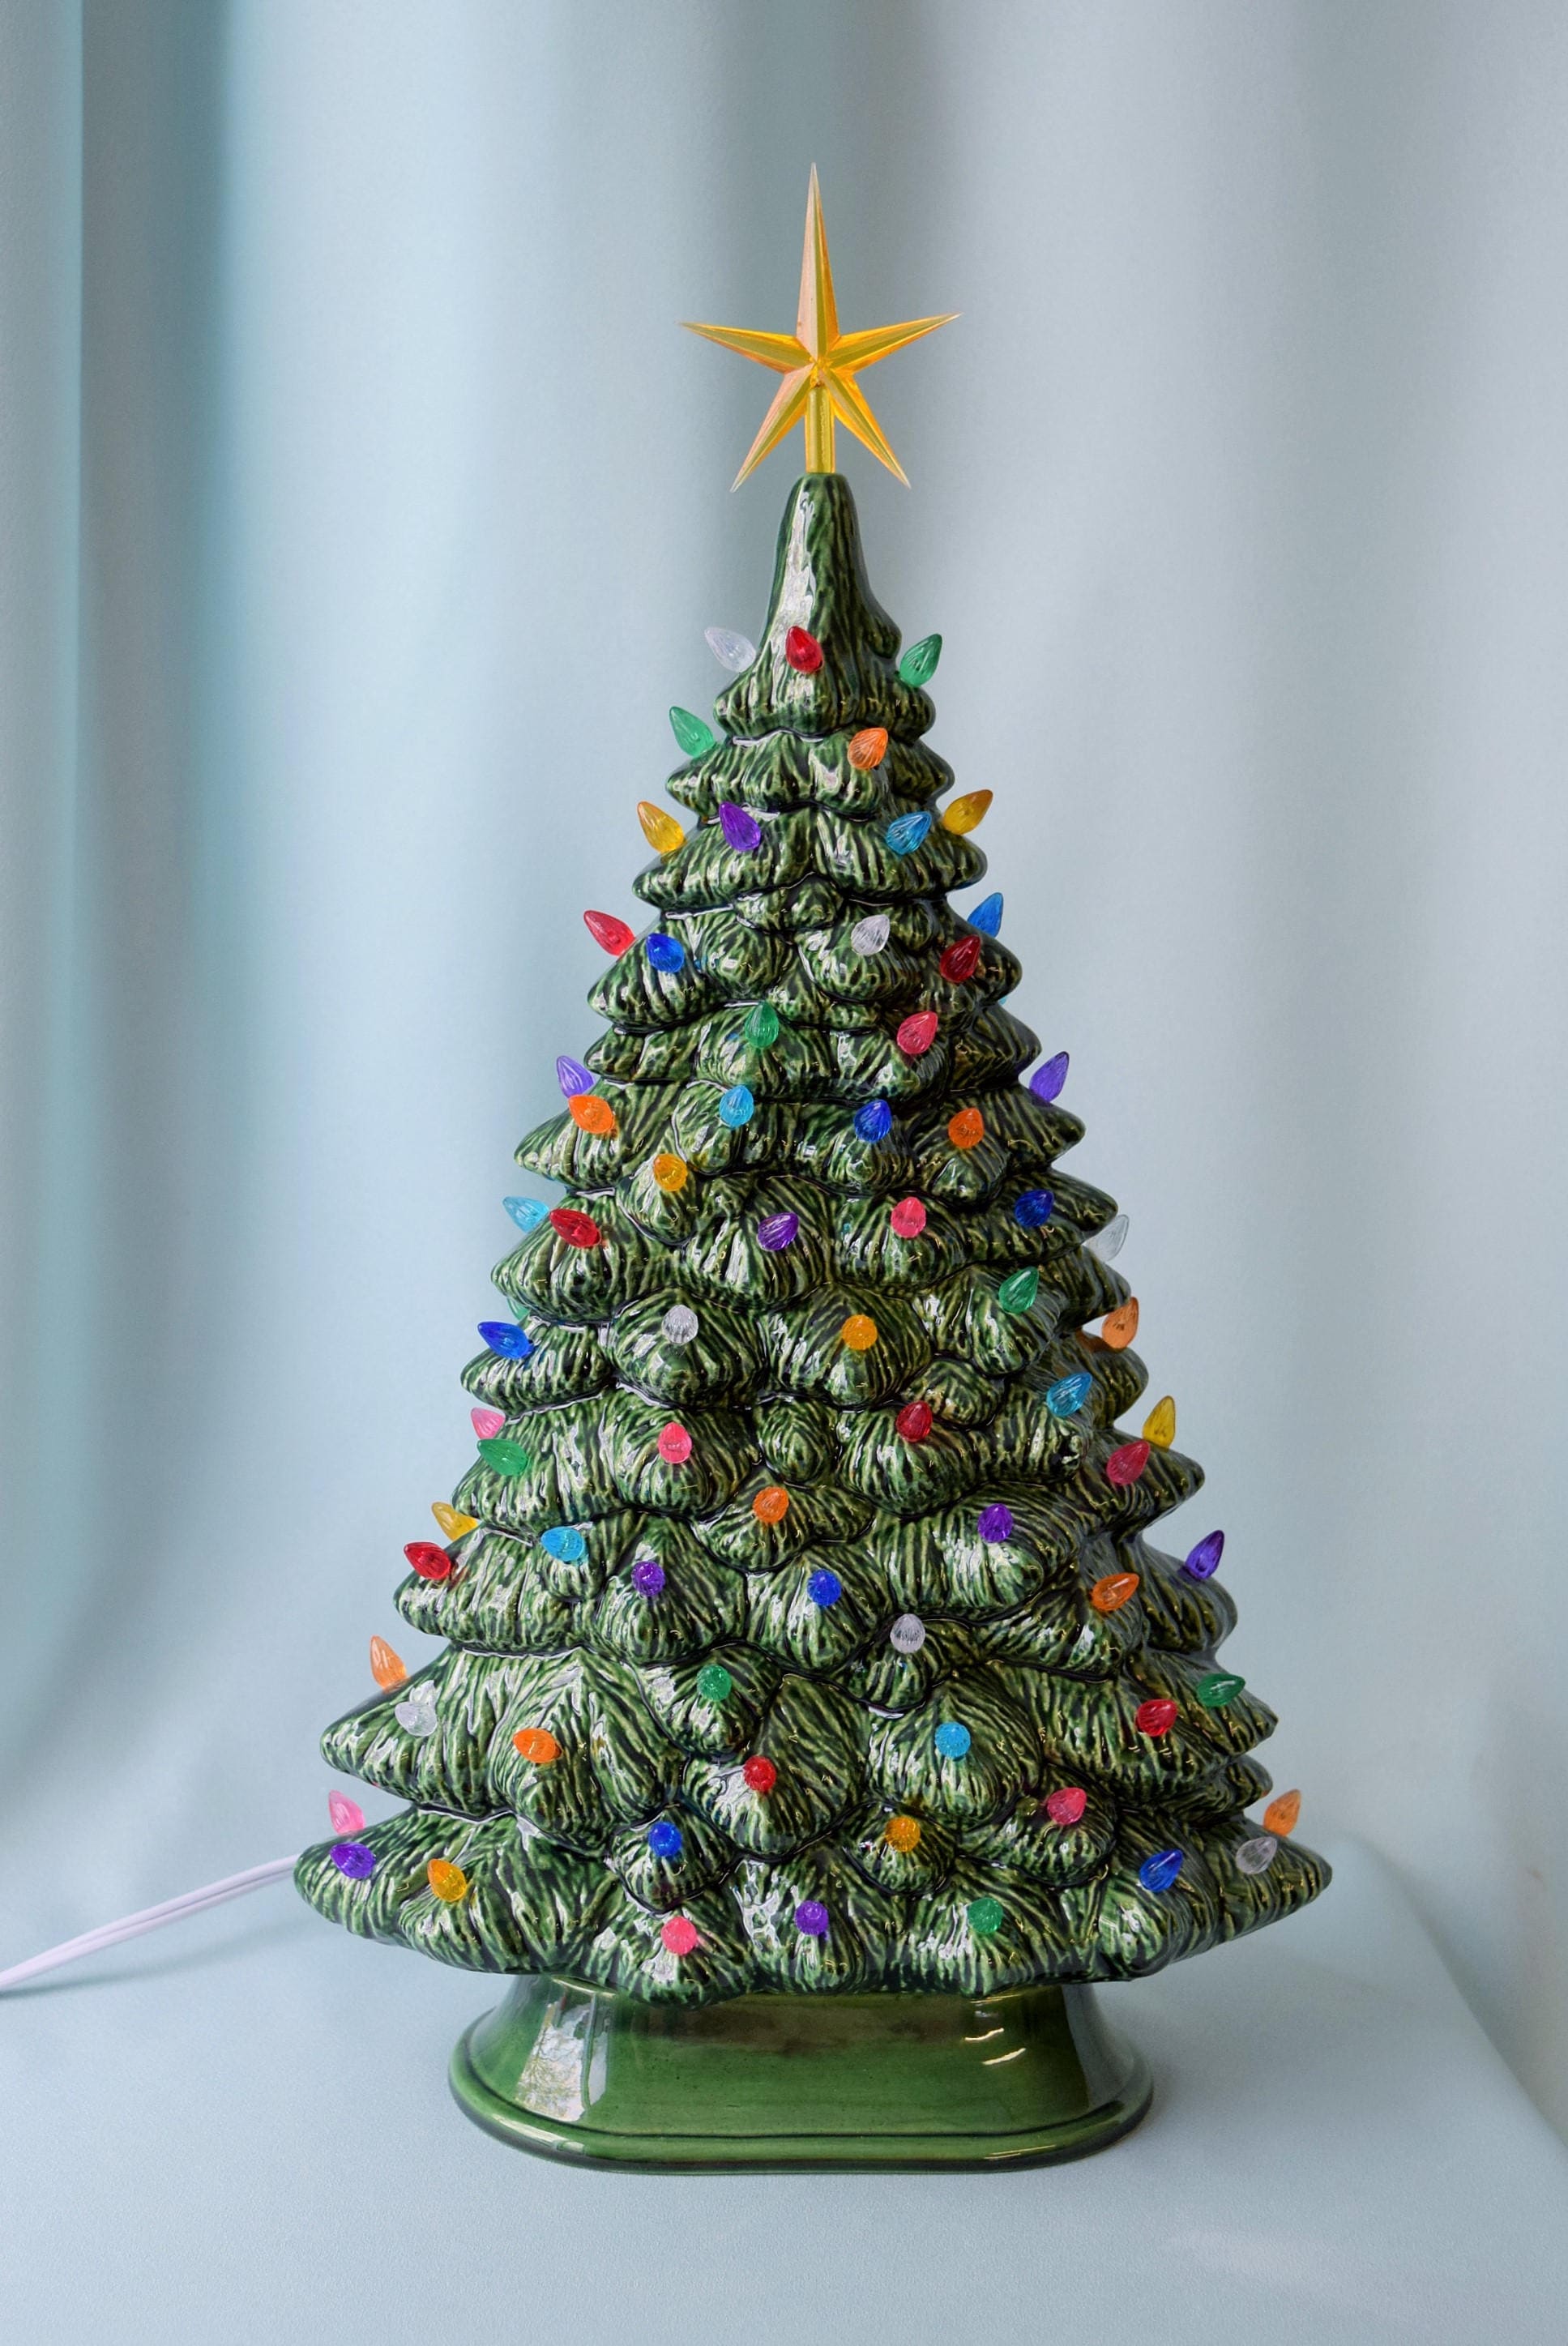 RM ROOMERS Ceramic Christmas Tree Set of 2, Led Porcelain